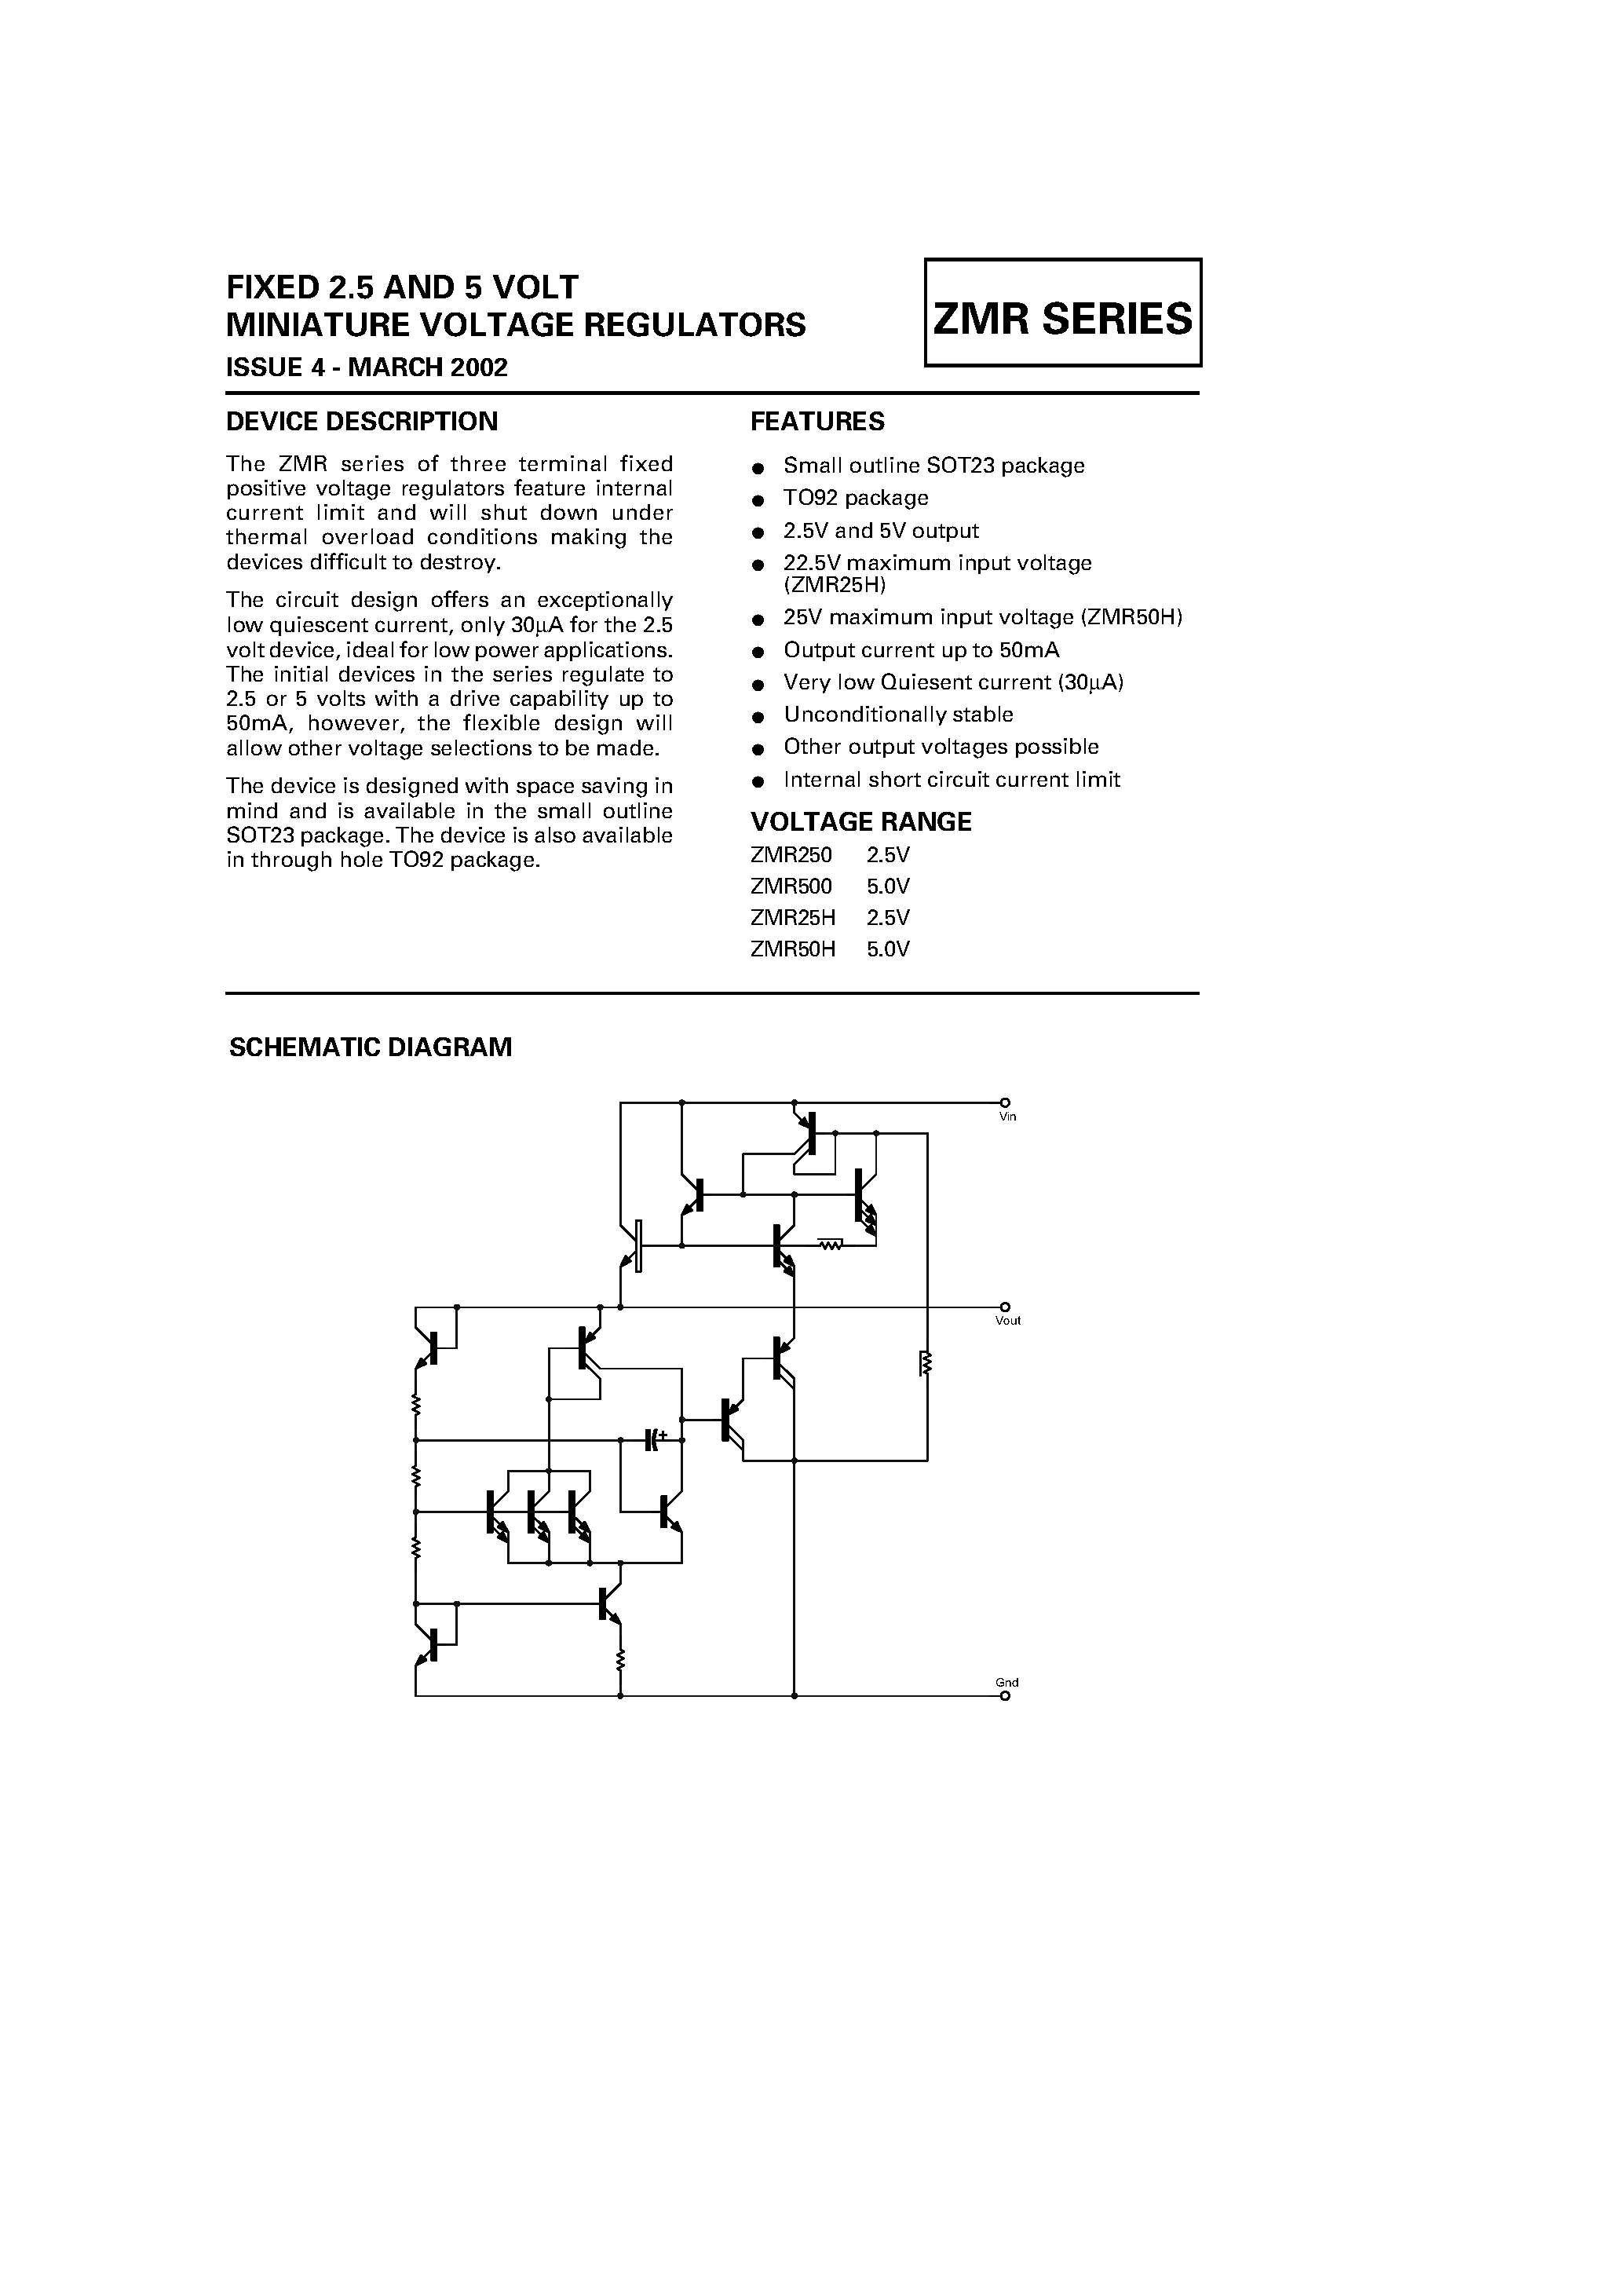 Datasheet ZMR250 - FIXED 2.5 AND 5 VOLT MINIATURE VOLTAGE REGULATORS page 1